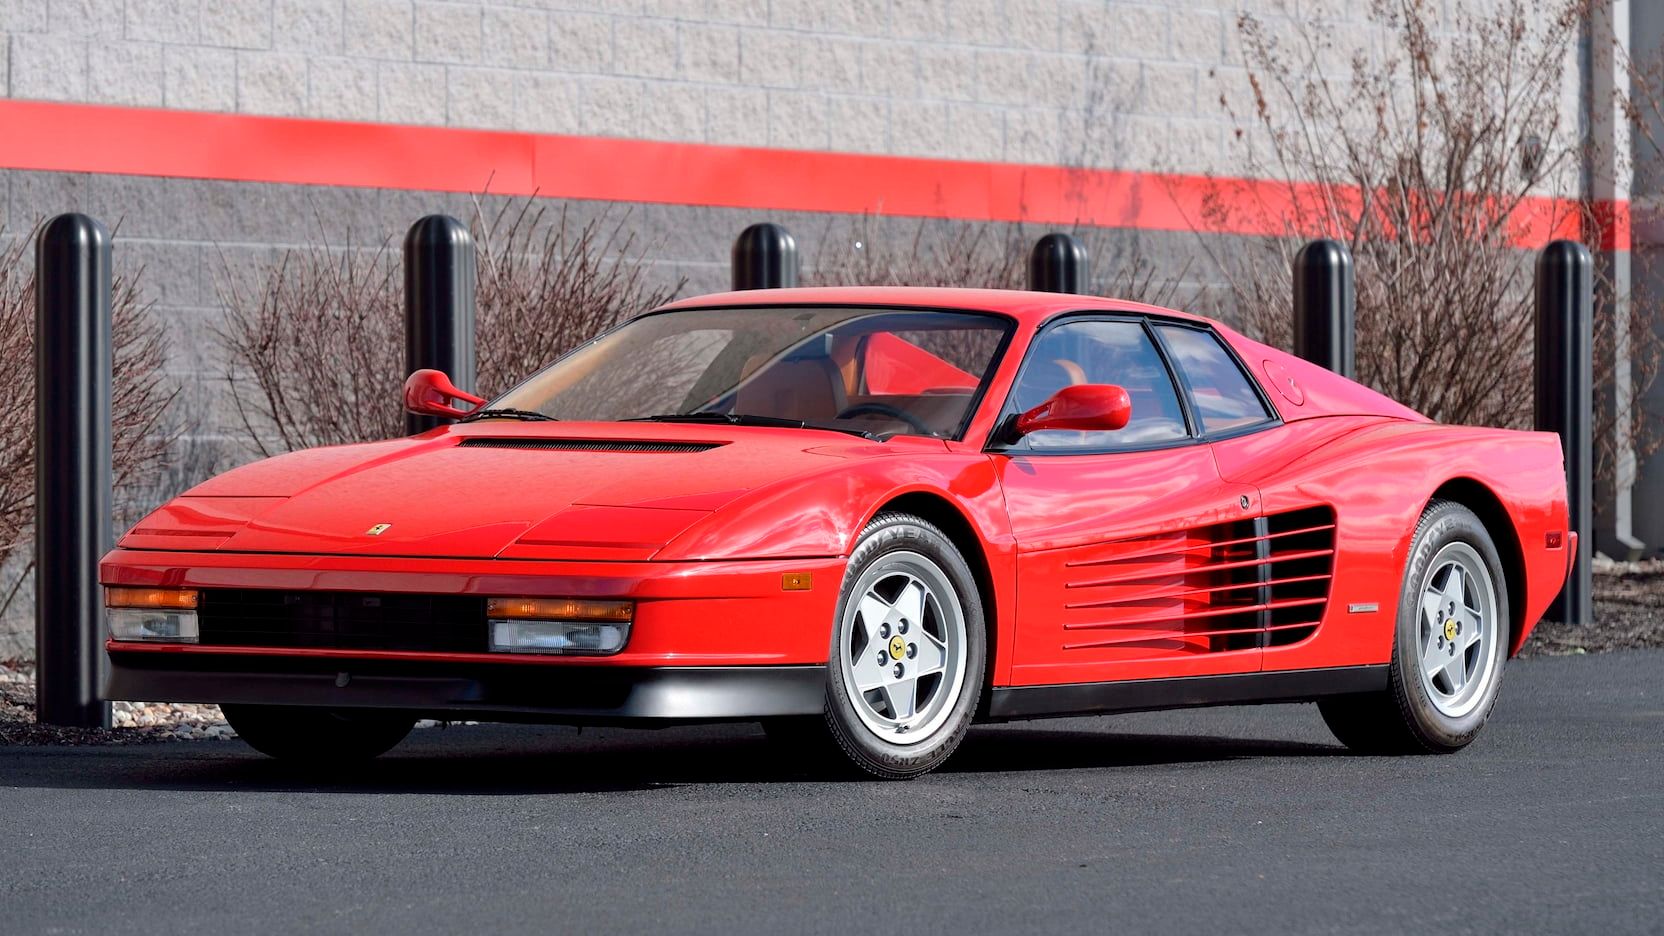 1989 Ferrari Testarossa up for auction